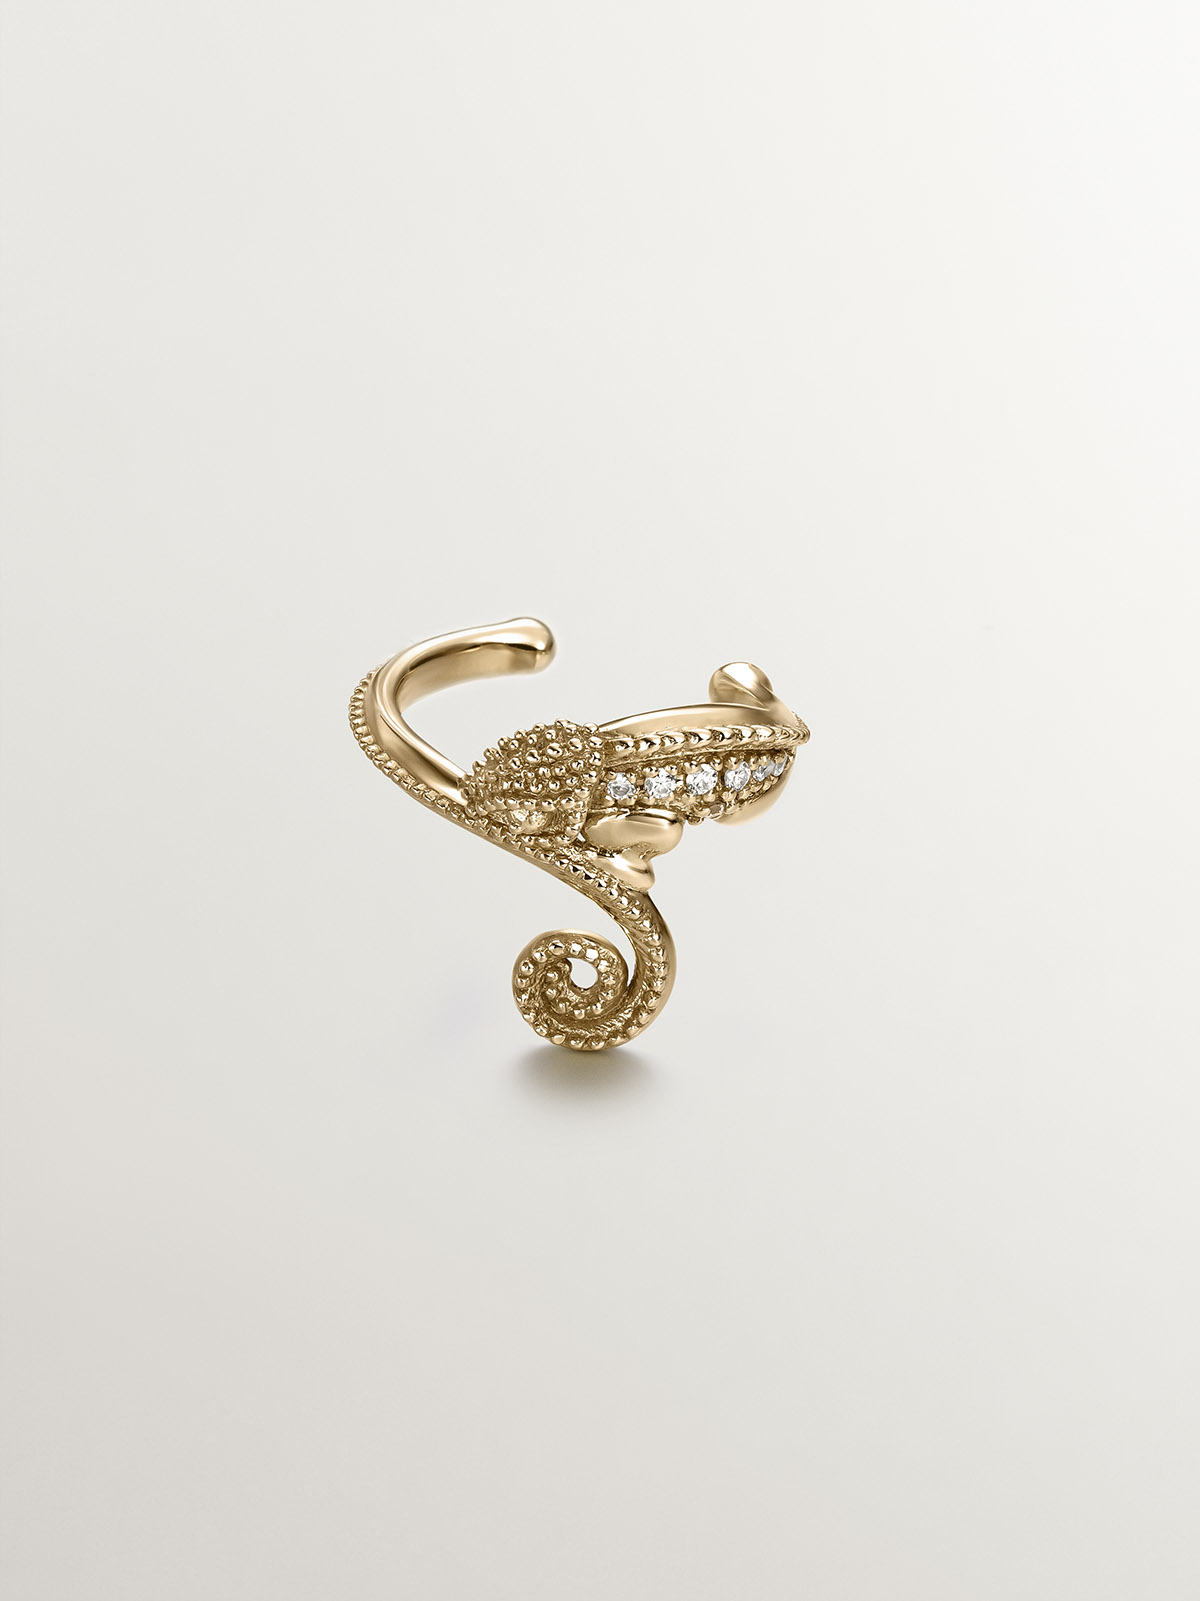 18K Yellow Gold Earcuff Earring with Chameleon-shaped Diamonds